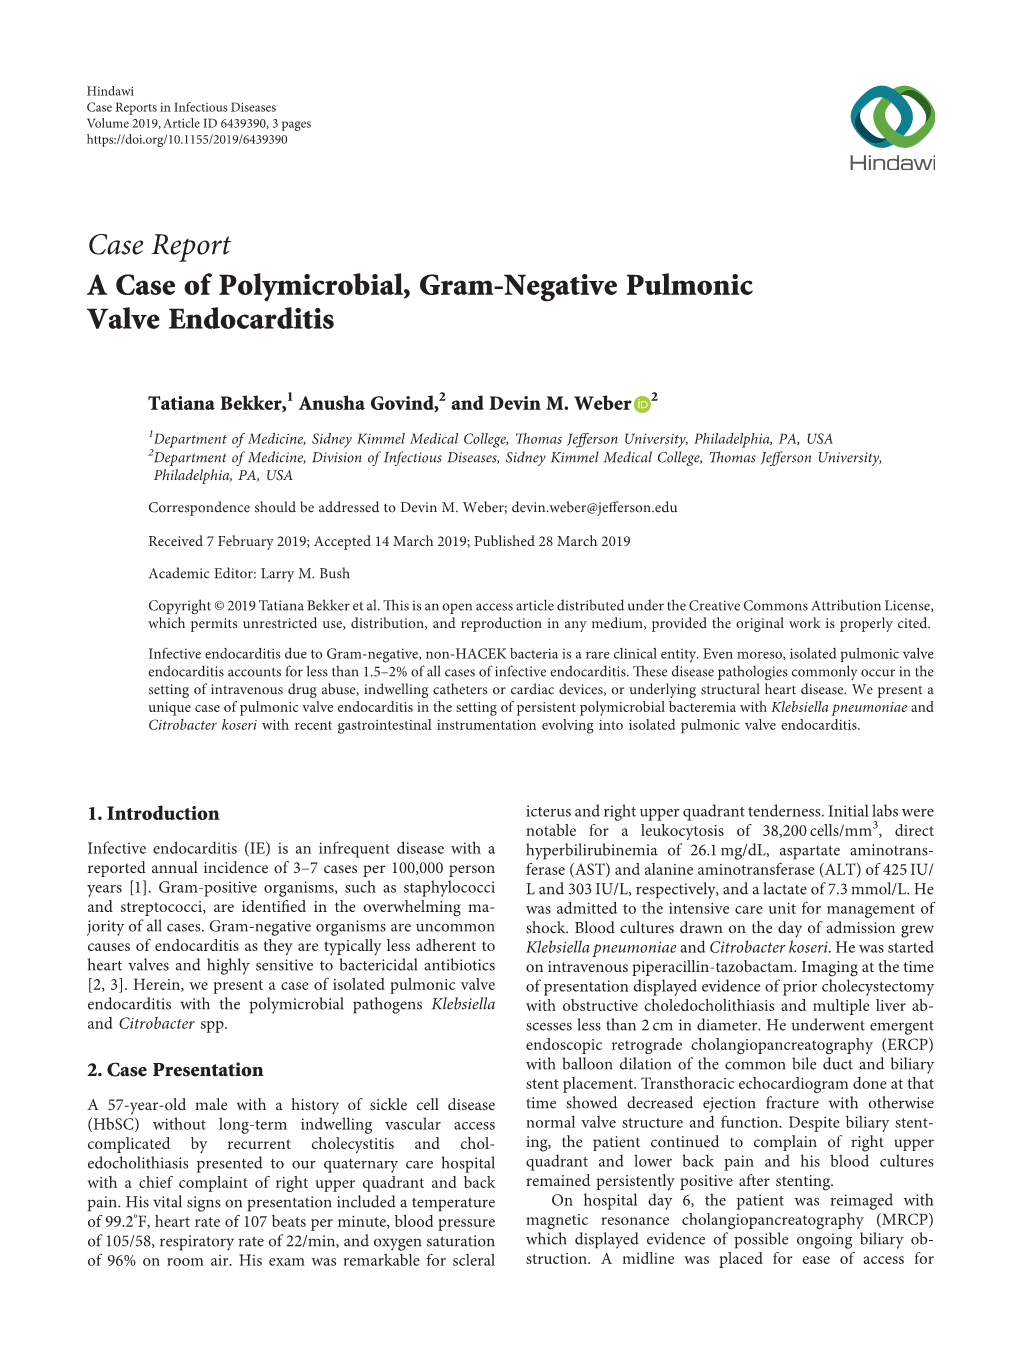 A Case of Polymicrobial, Gram-Negative Pulmonic Valve Endocarditis